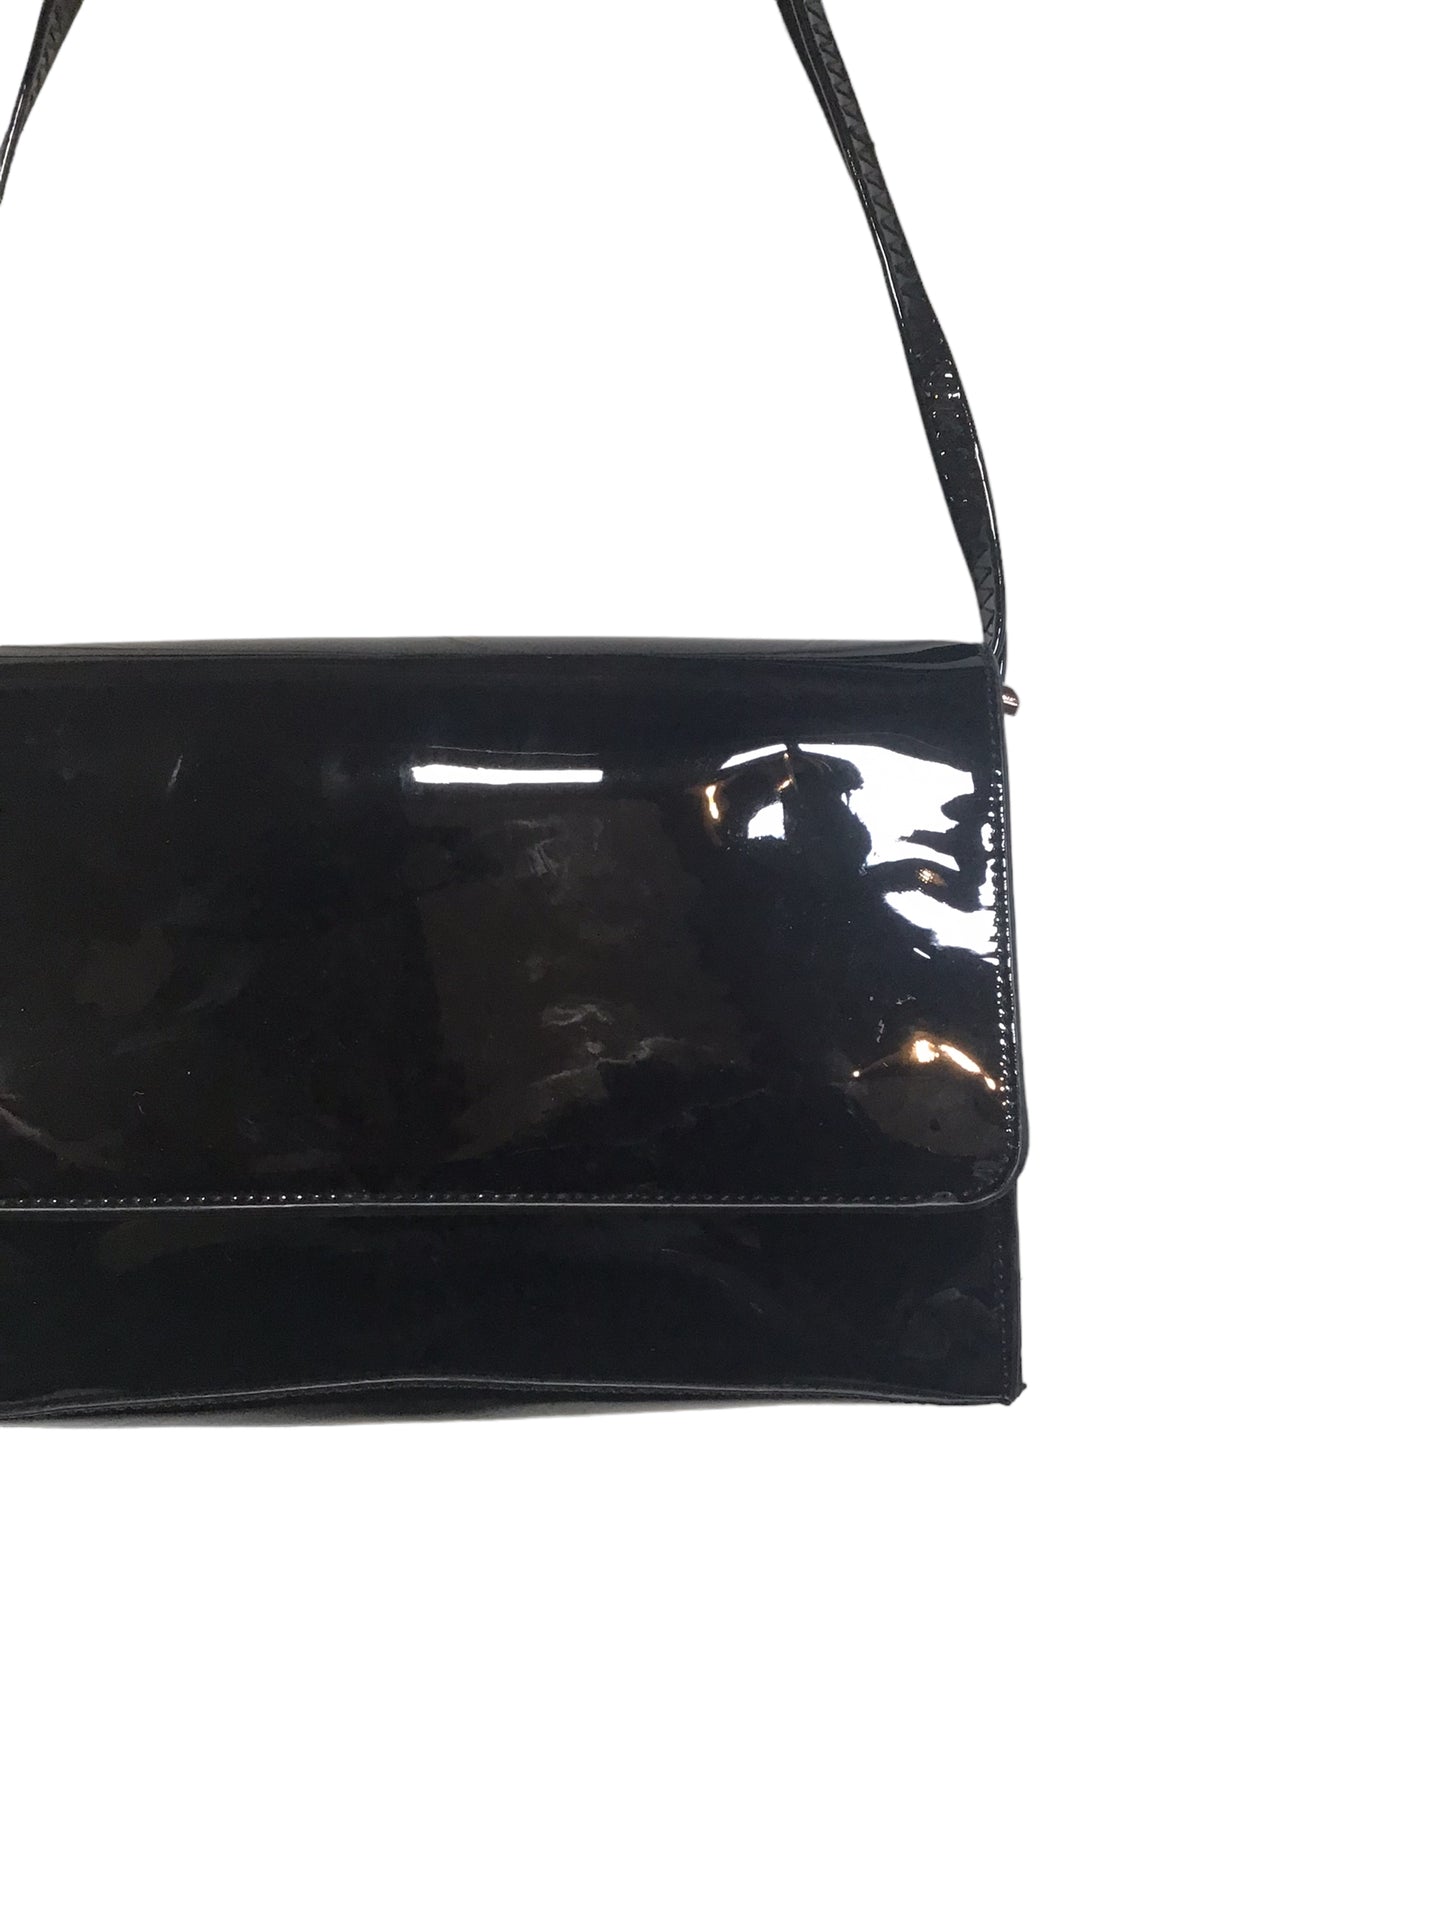 Black Evening Bag (W28xH20cm)